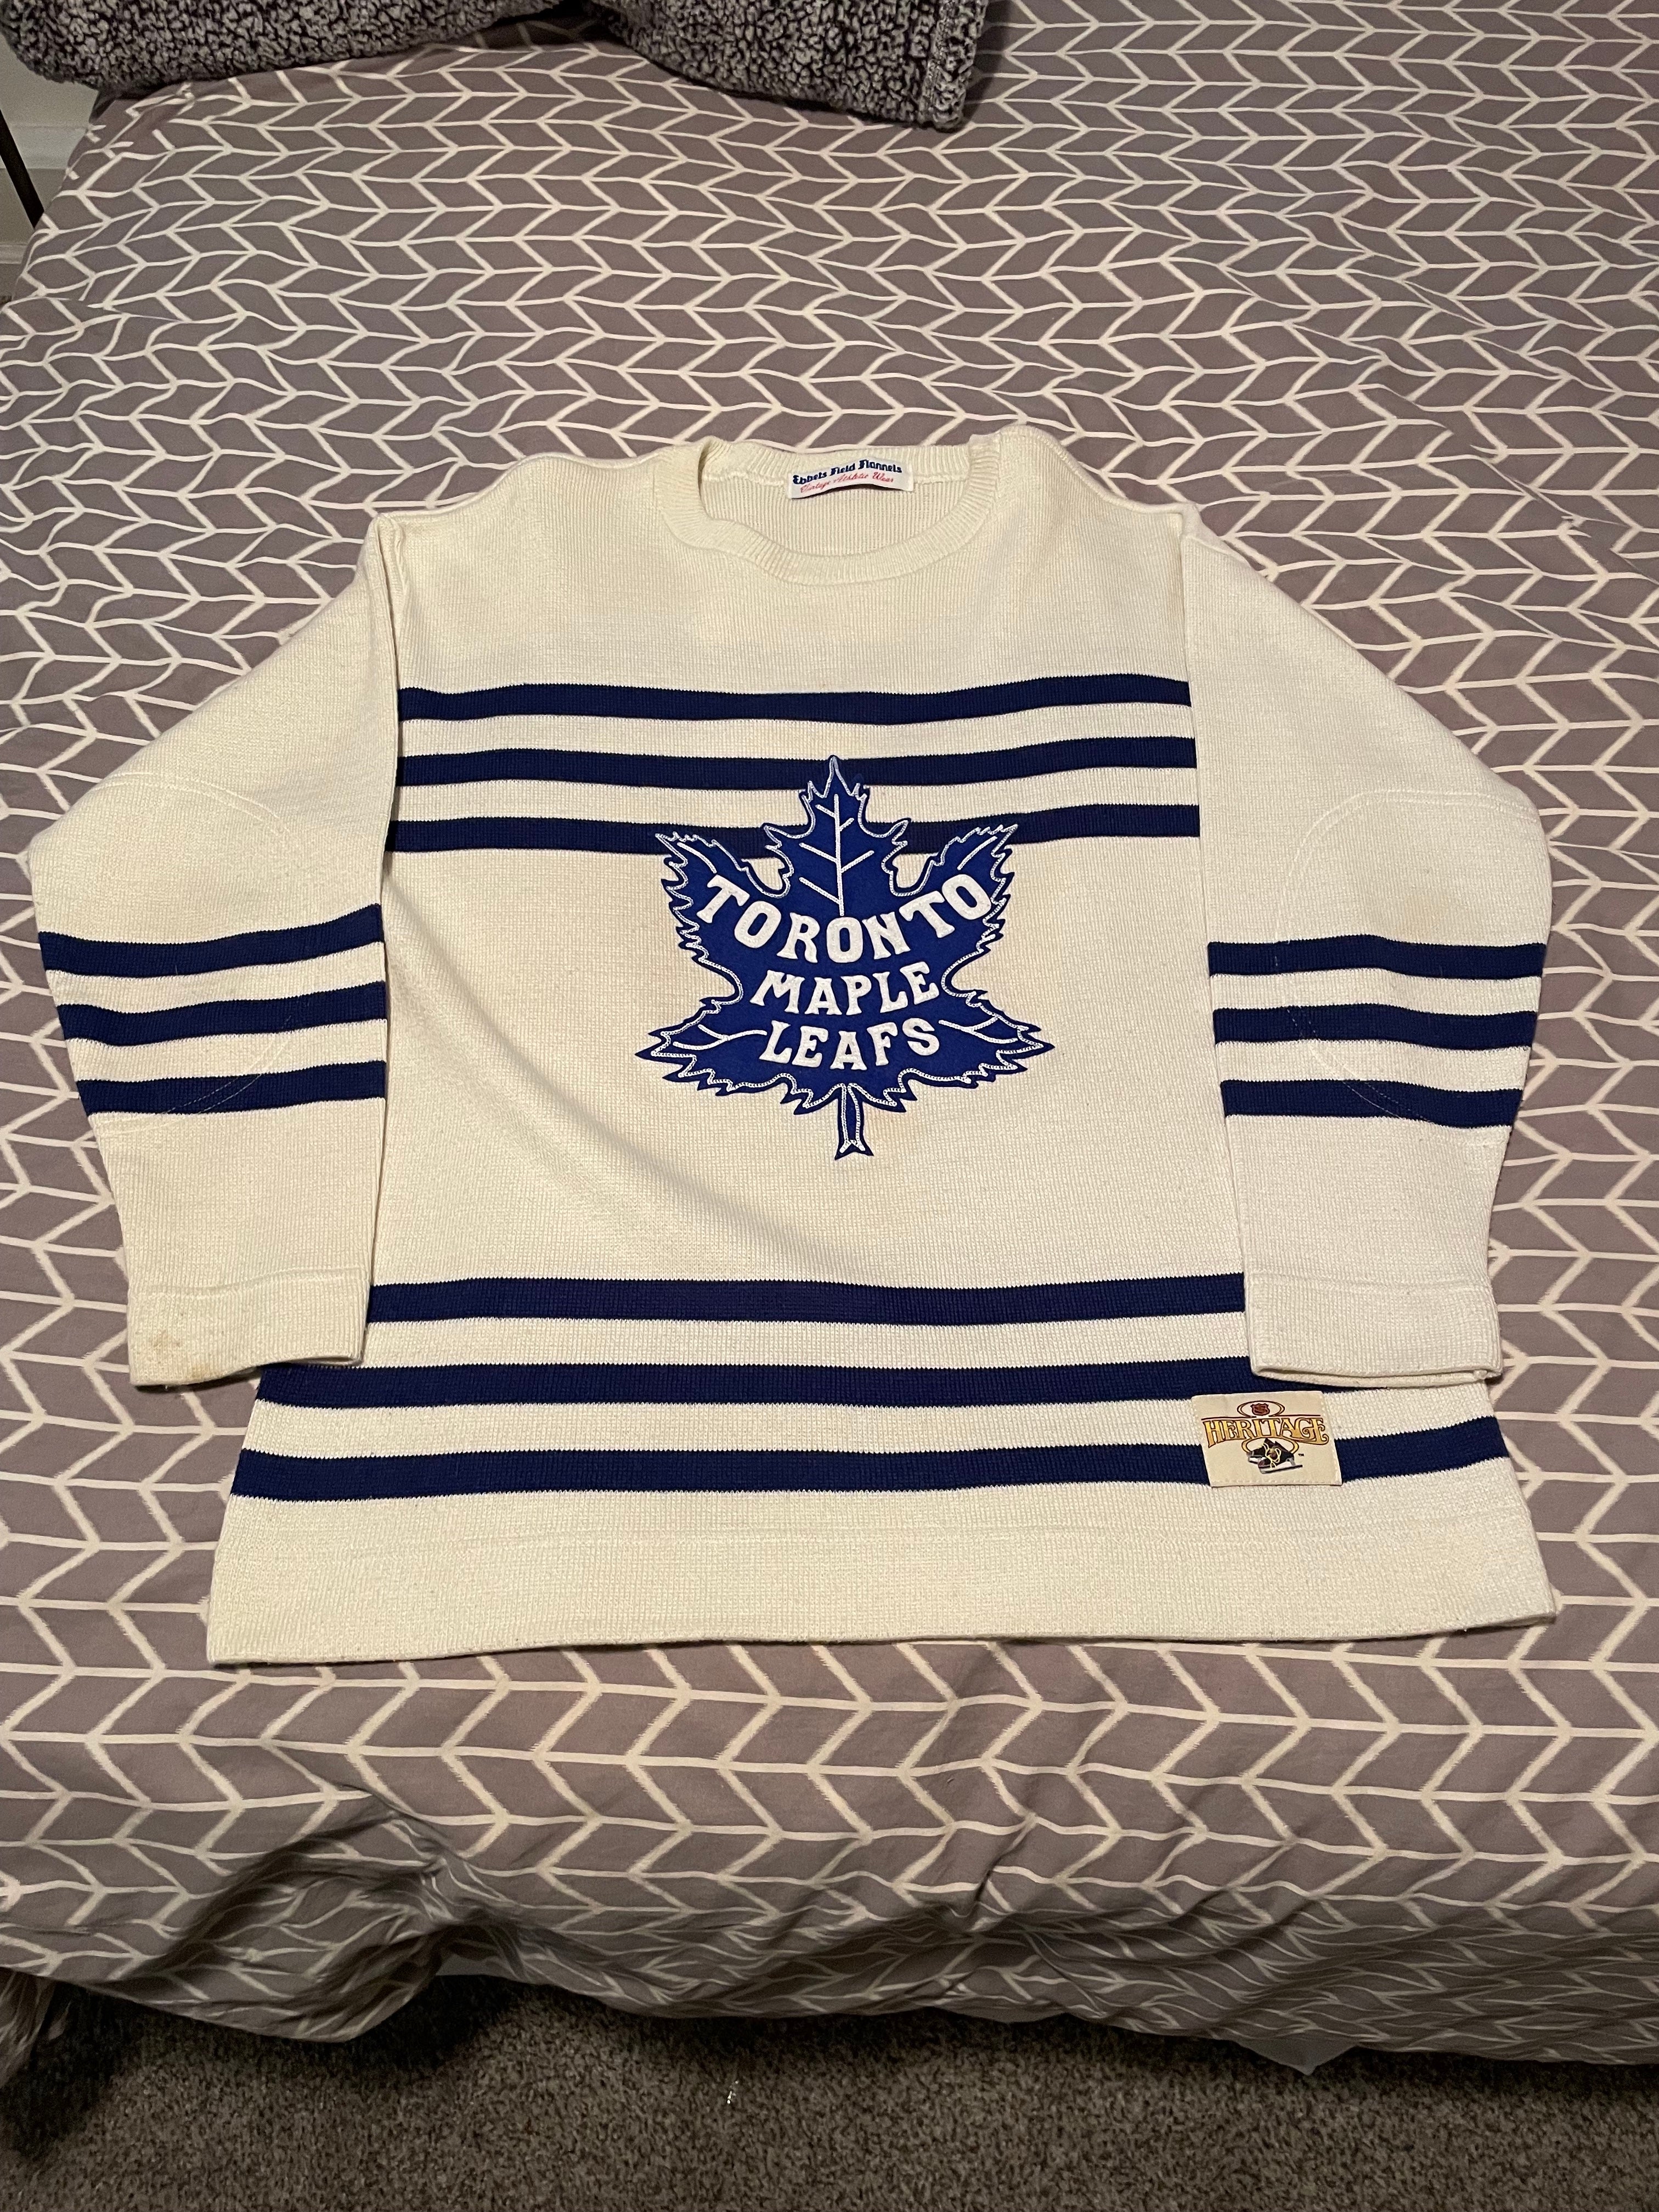 Toronto Maple Leafs Wool Type Hockey Jersey Sweater NHL Blue Mens